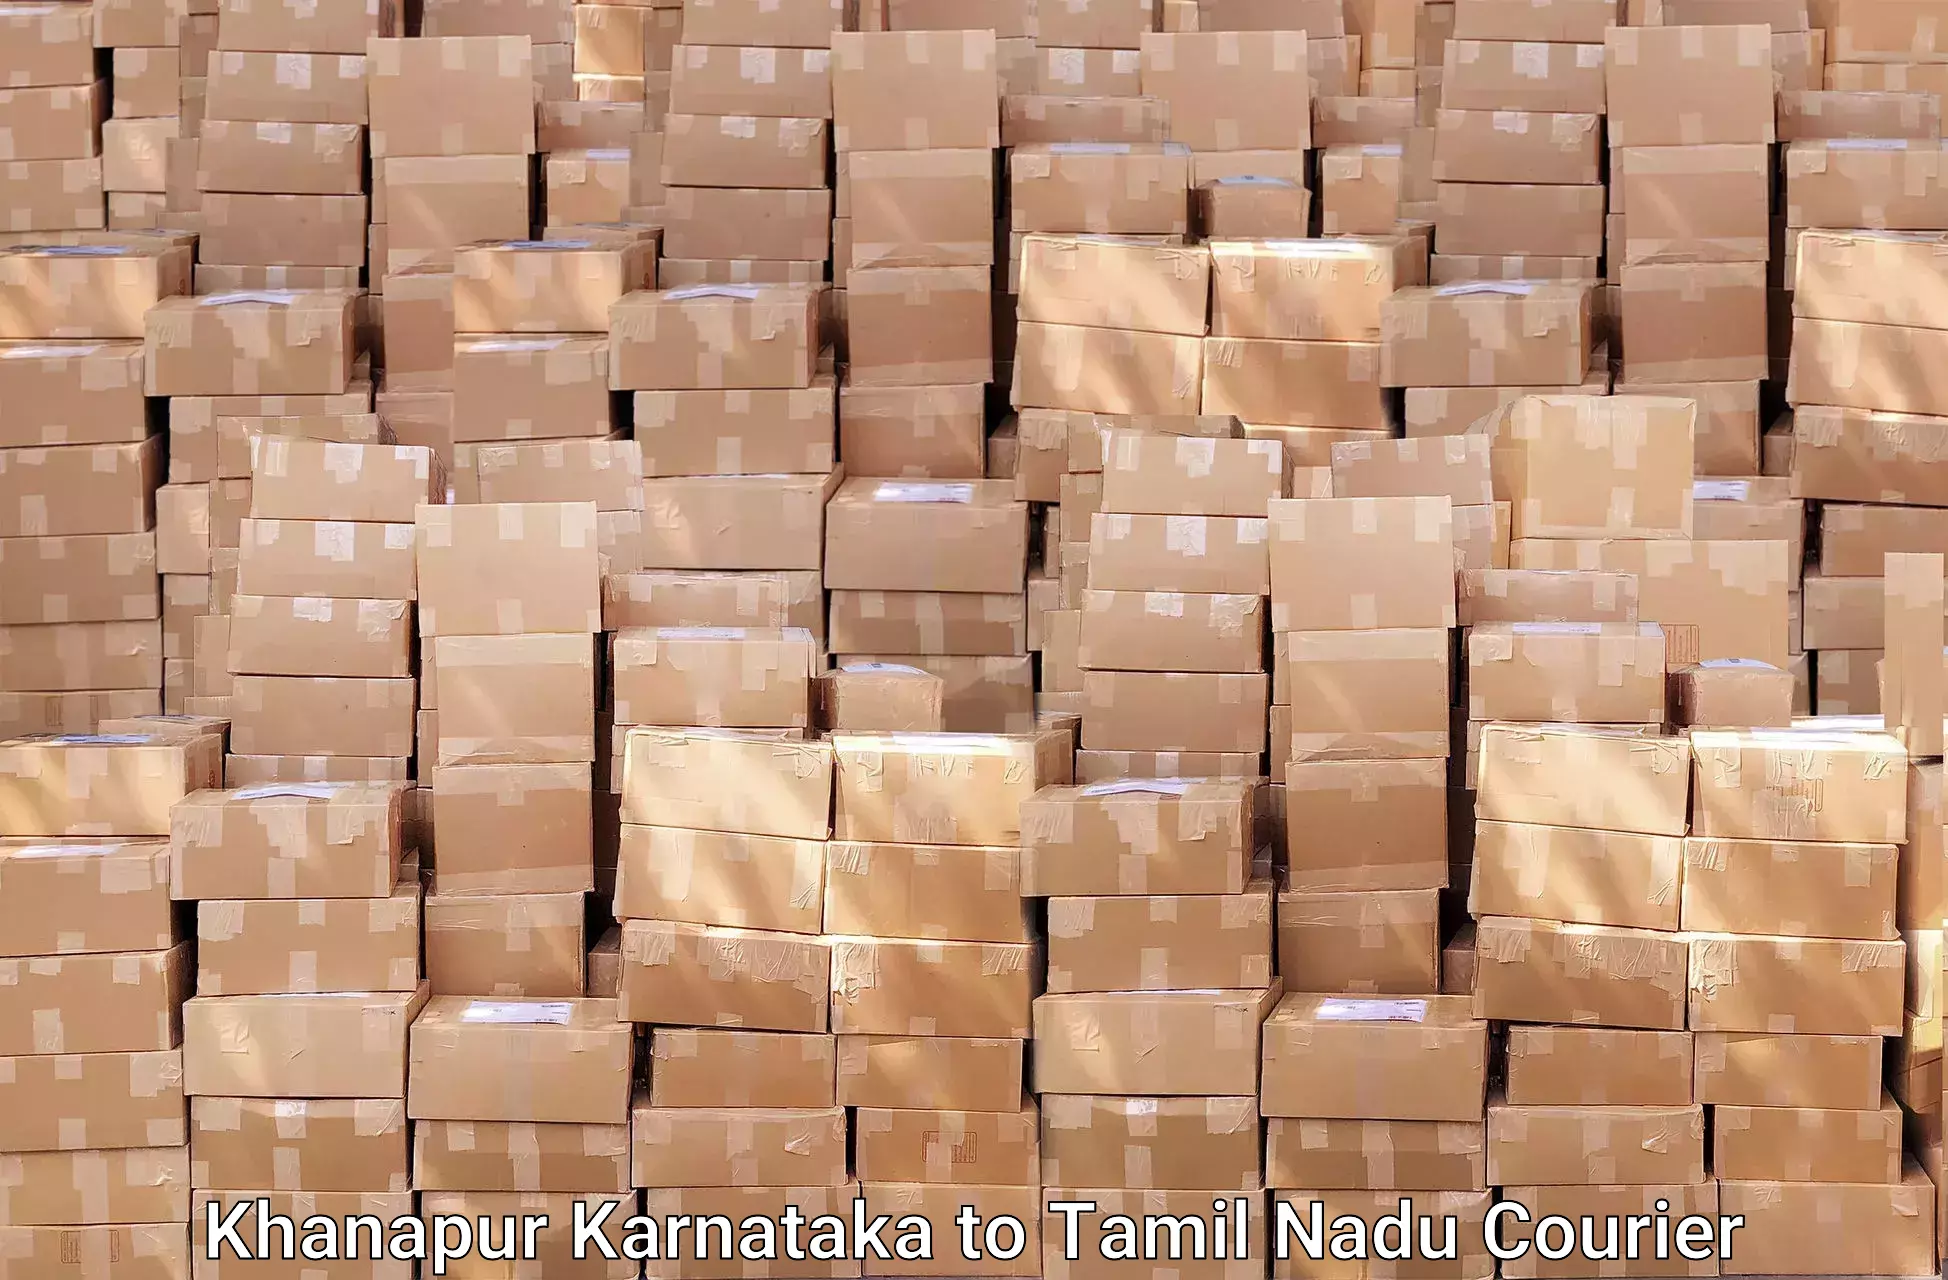 Moving and storage services Khanapur Karnataka to Thiruvarur